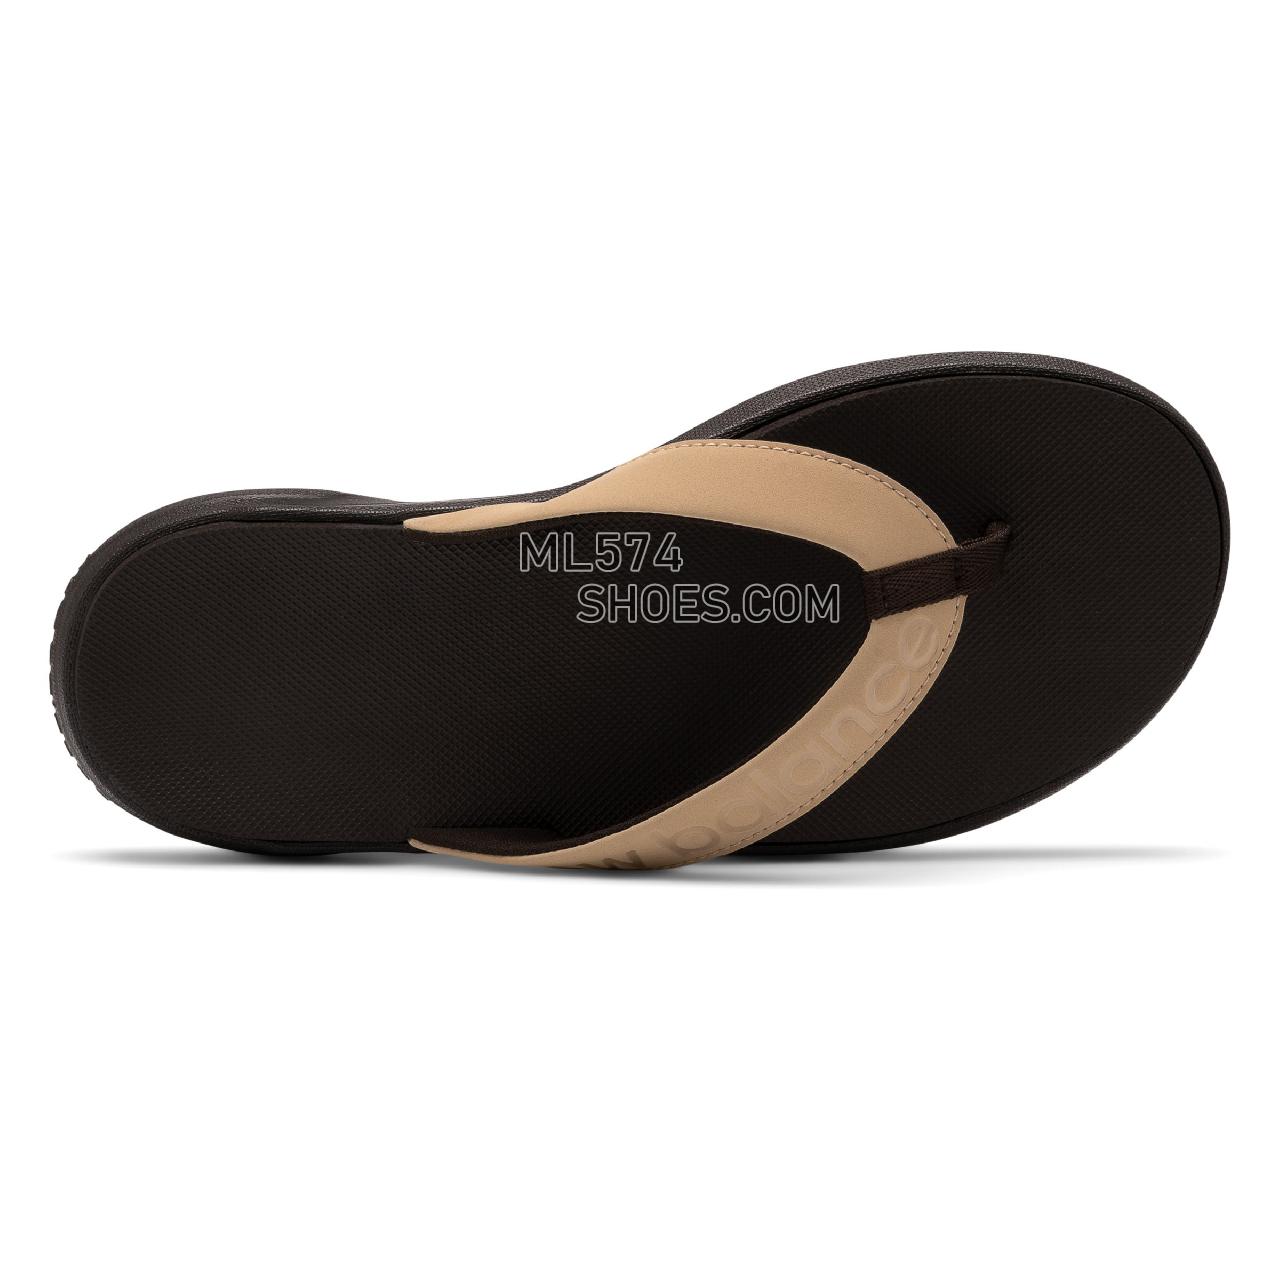 New Balance 340 - Women's Flip Flops - Brown with Tan - SWT340X1